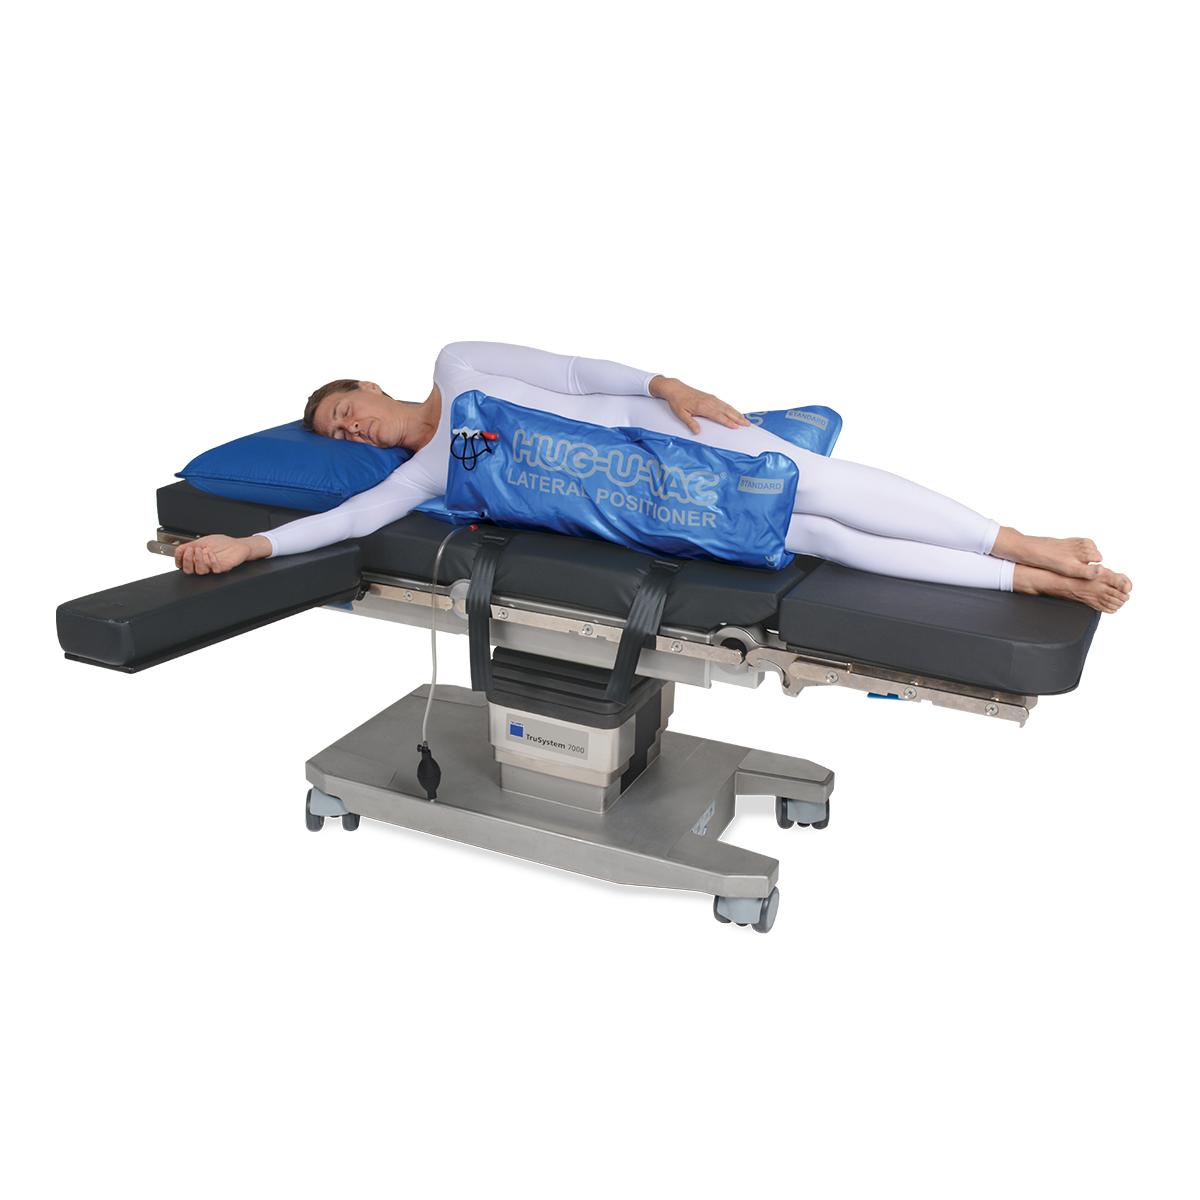 Allen® Hug-U-Vac® Lateral Positioner med patienten i sidol&auml;ge